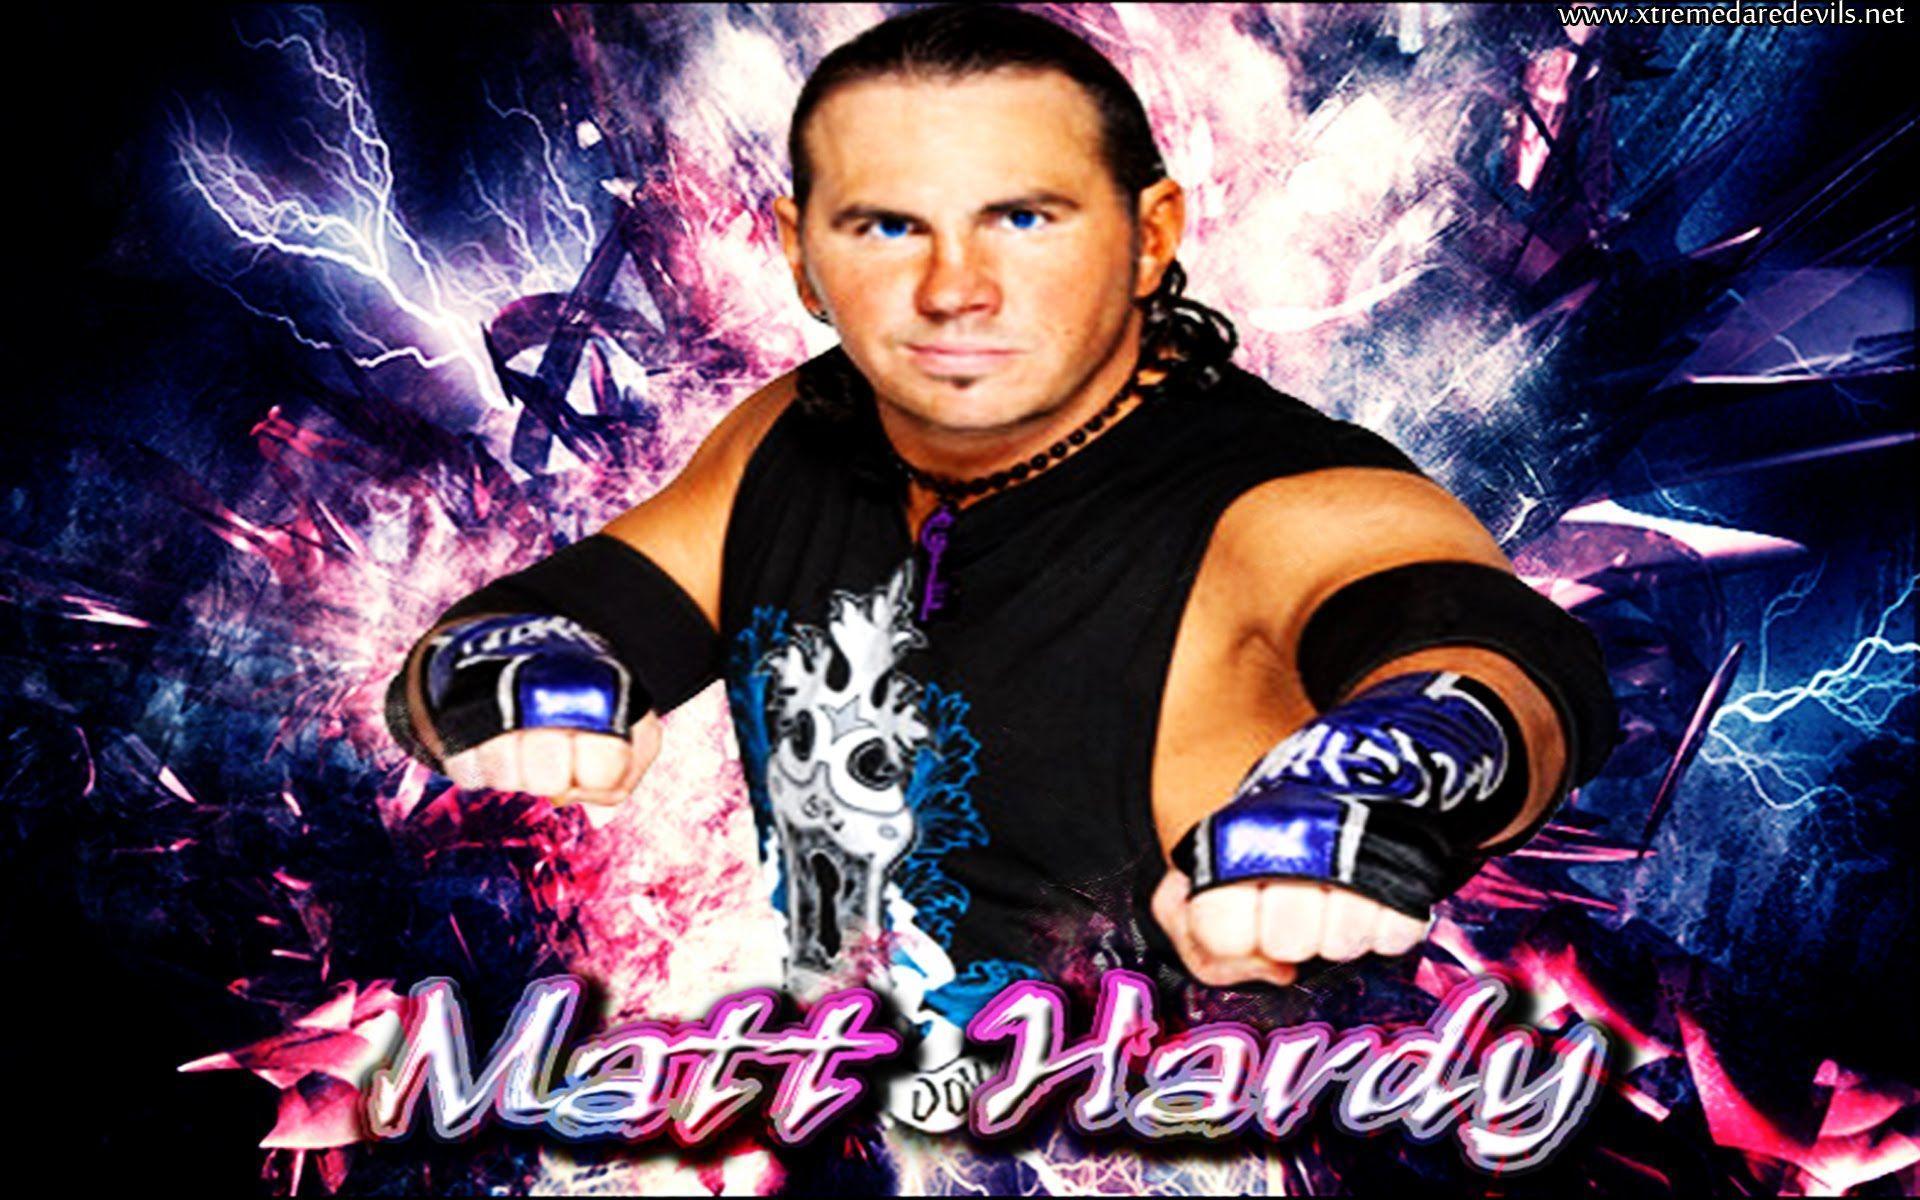 Matt Hardy Tribute.. Time of dying.. 2015 WWE